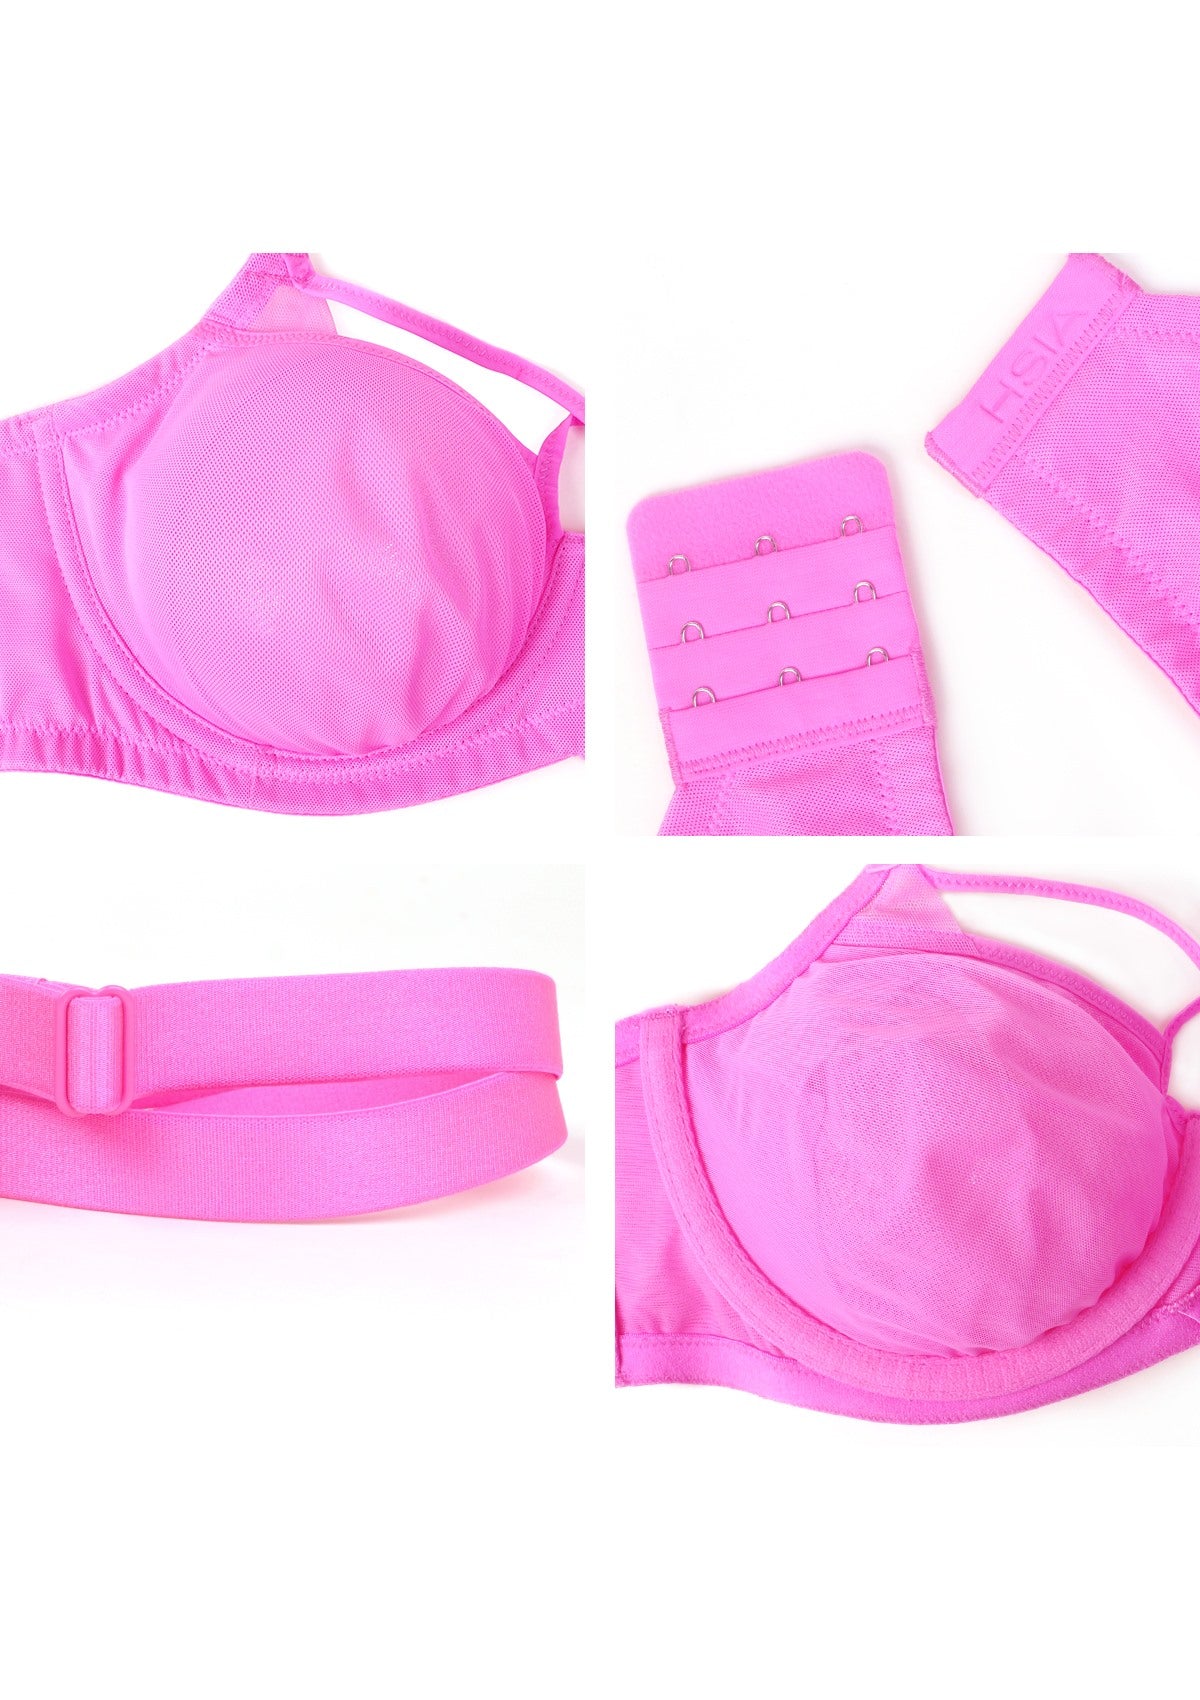 HSIA Billie Cross Front Strap Smooth Sheer Mesh Comfy Underwire Bra - Barbie Pink / 40 / DDD/F